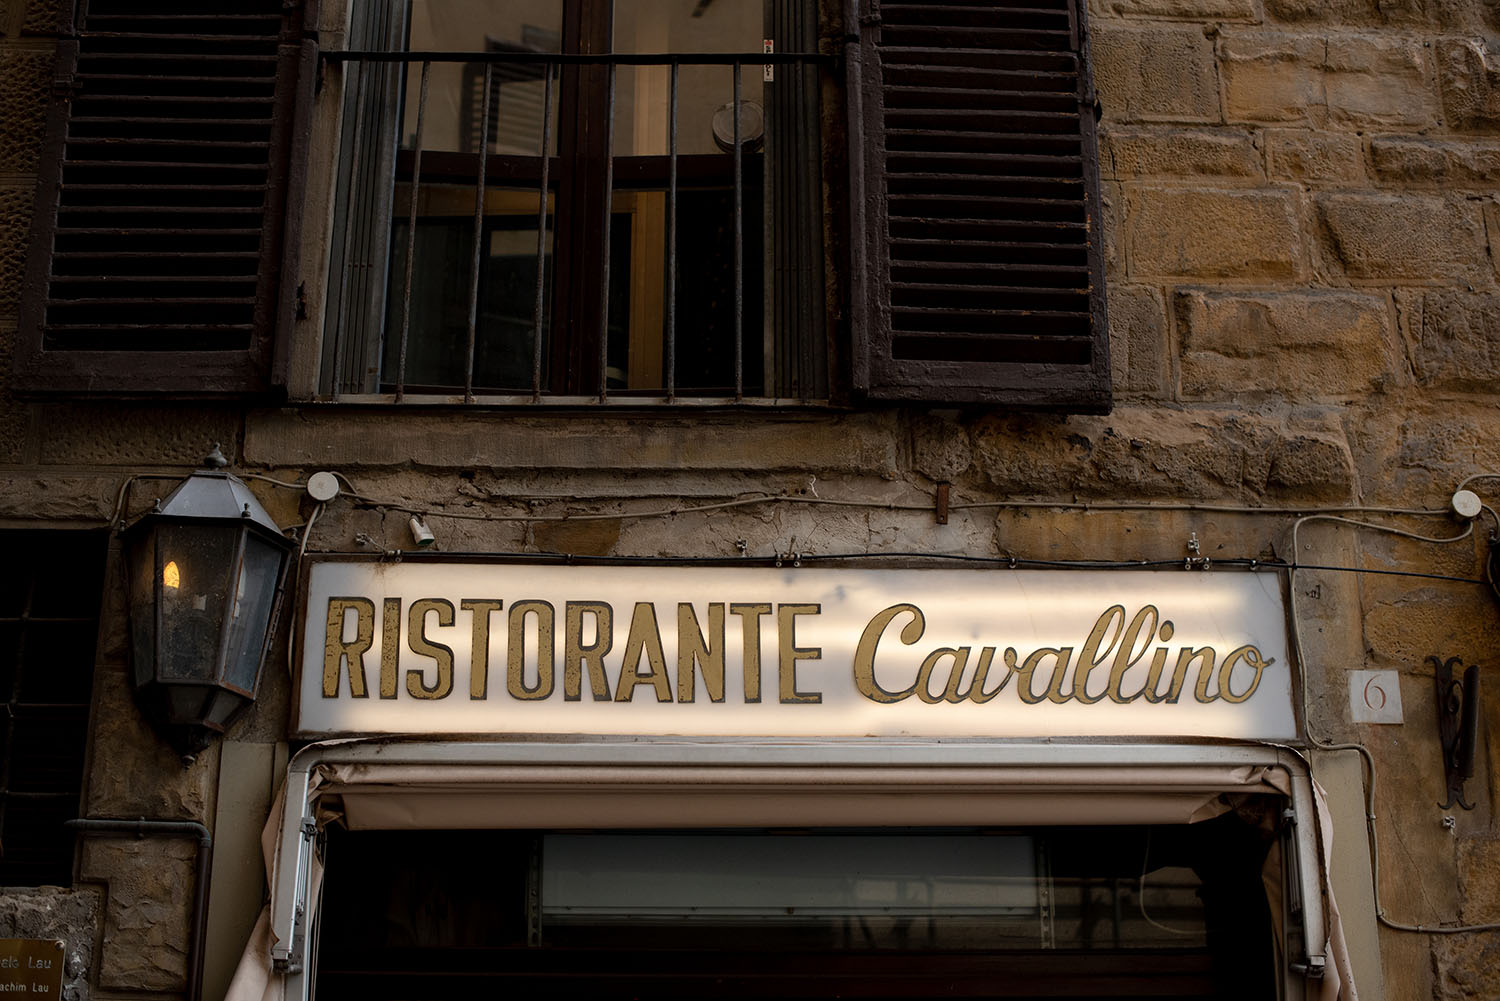 Coco & Vera - Vintage sign for Ristorante Cavallino in Florence, Italy